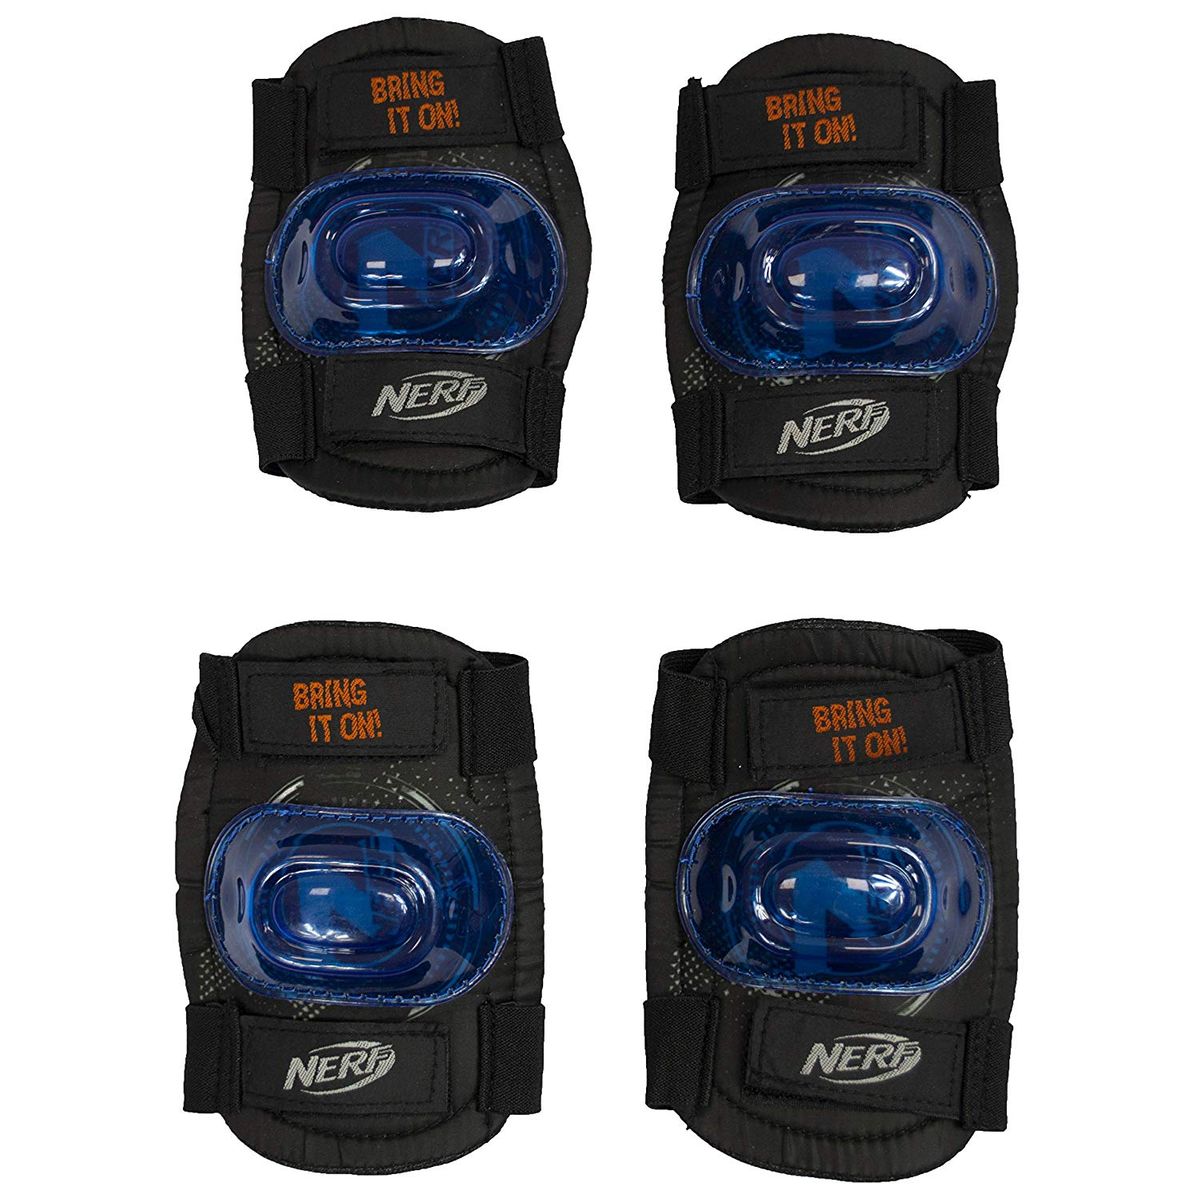 [RDY] [送料無料] Nerf セイフティギアSmall/Medium [楽天海外通販] | Nerf Safety Gear Small/Medium